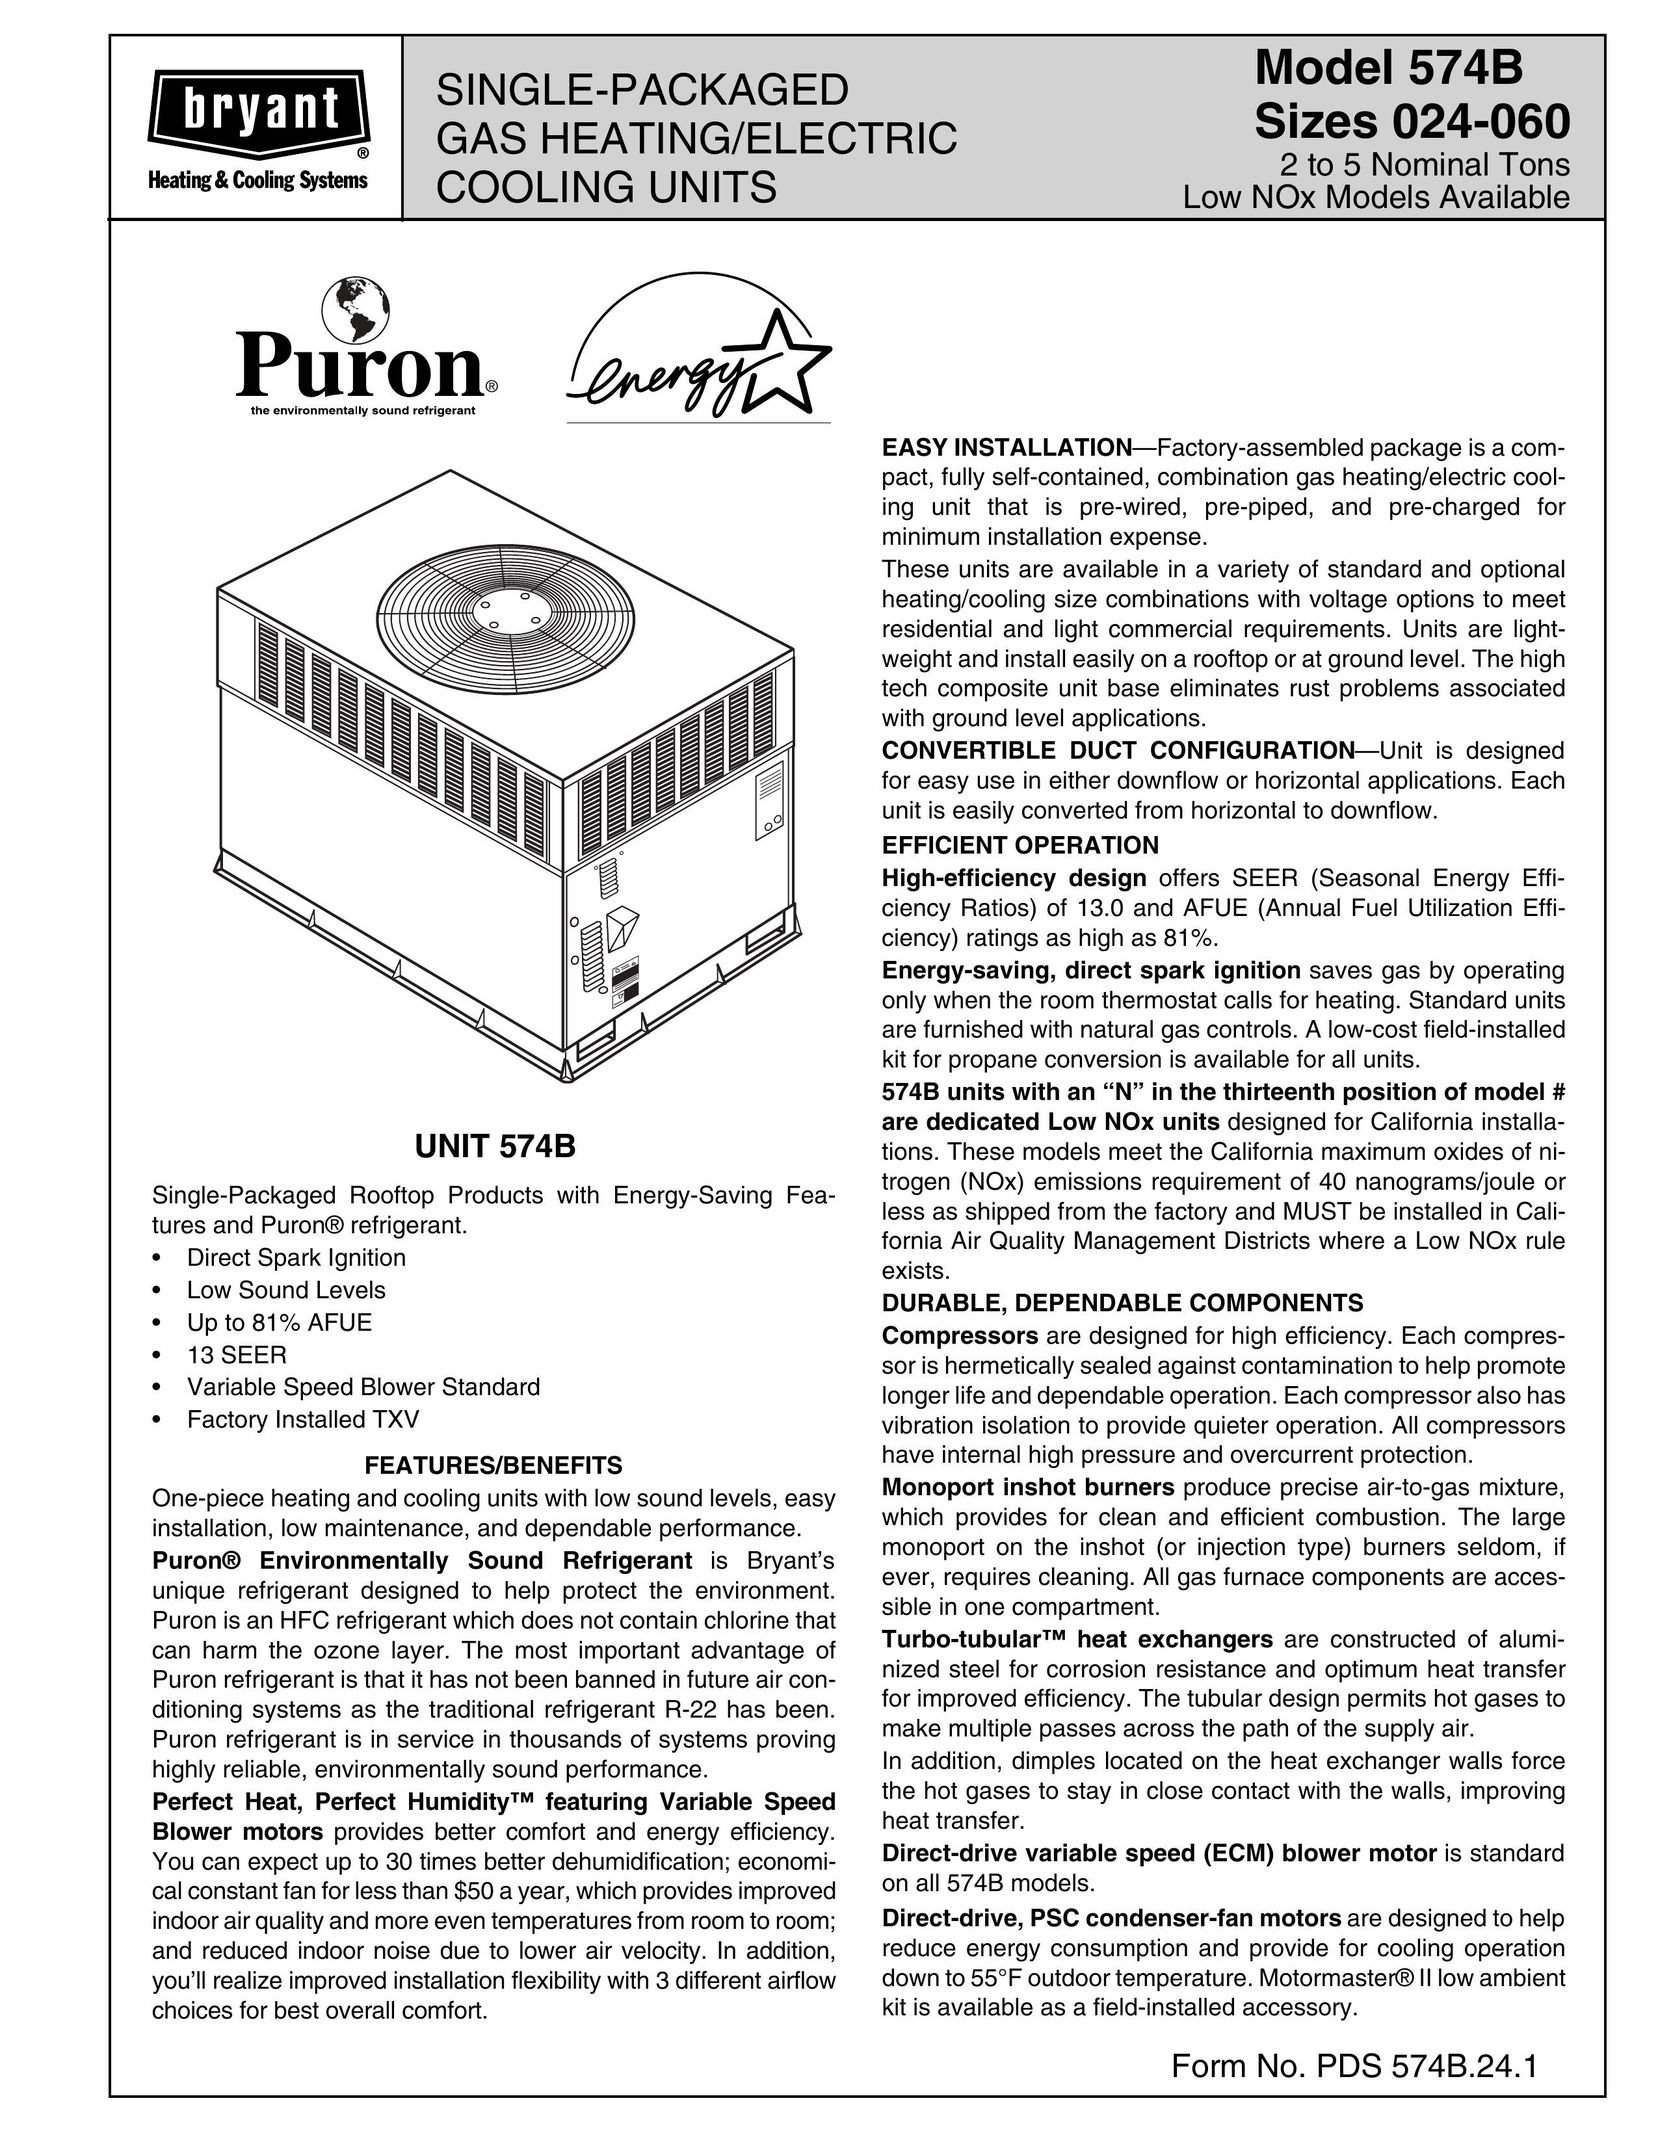 Bryant 574B Gas Heater User Manual